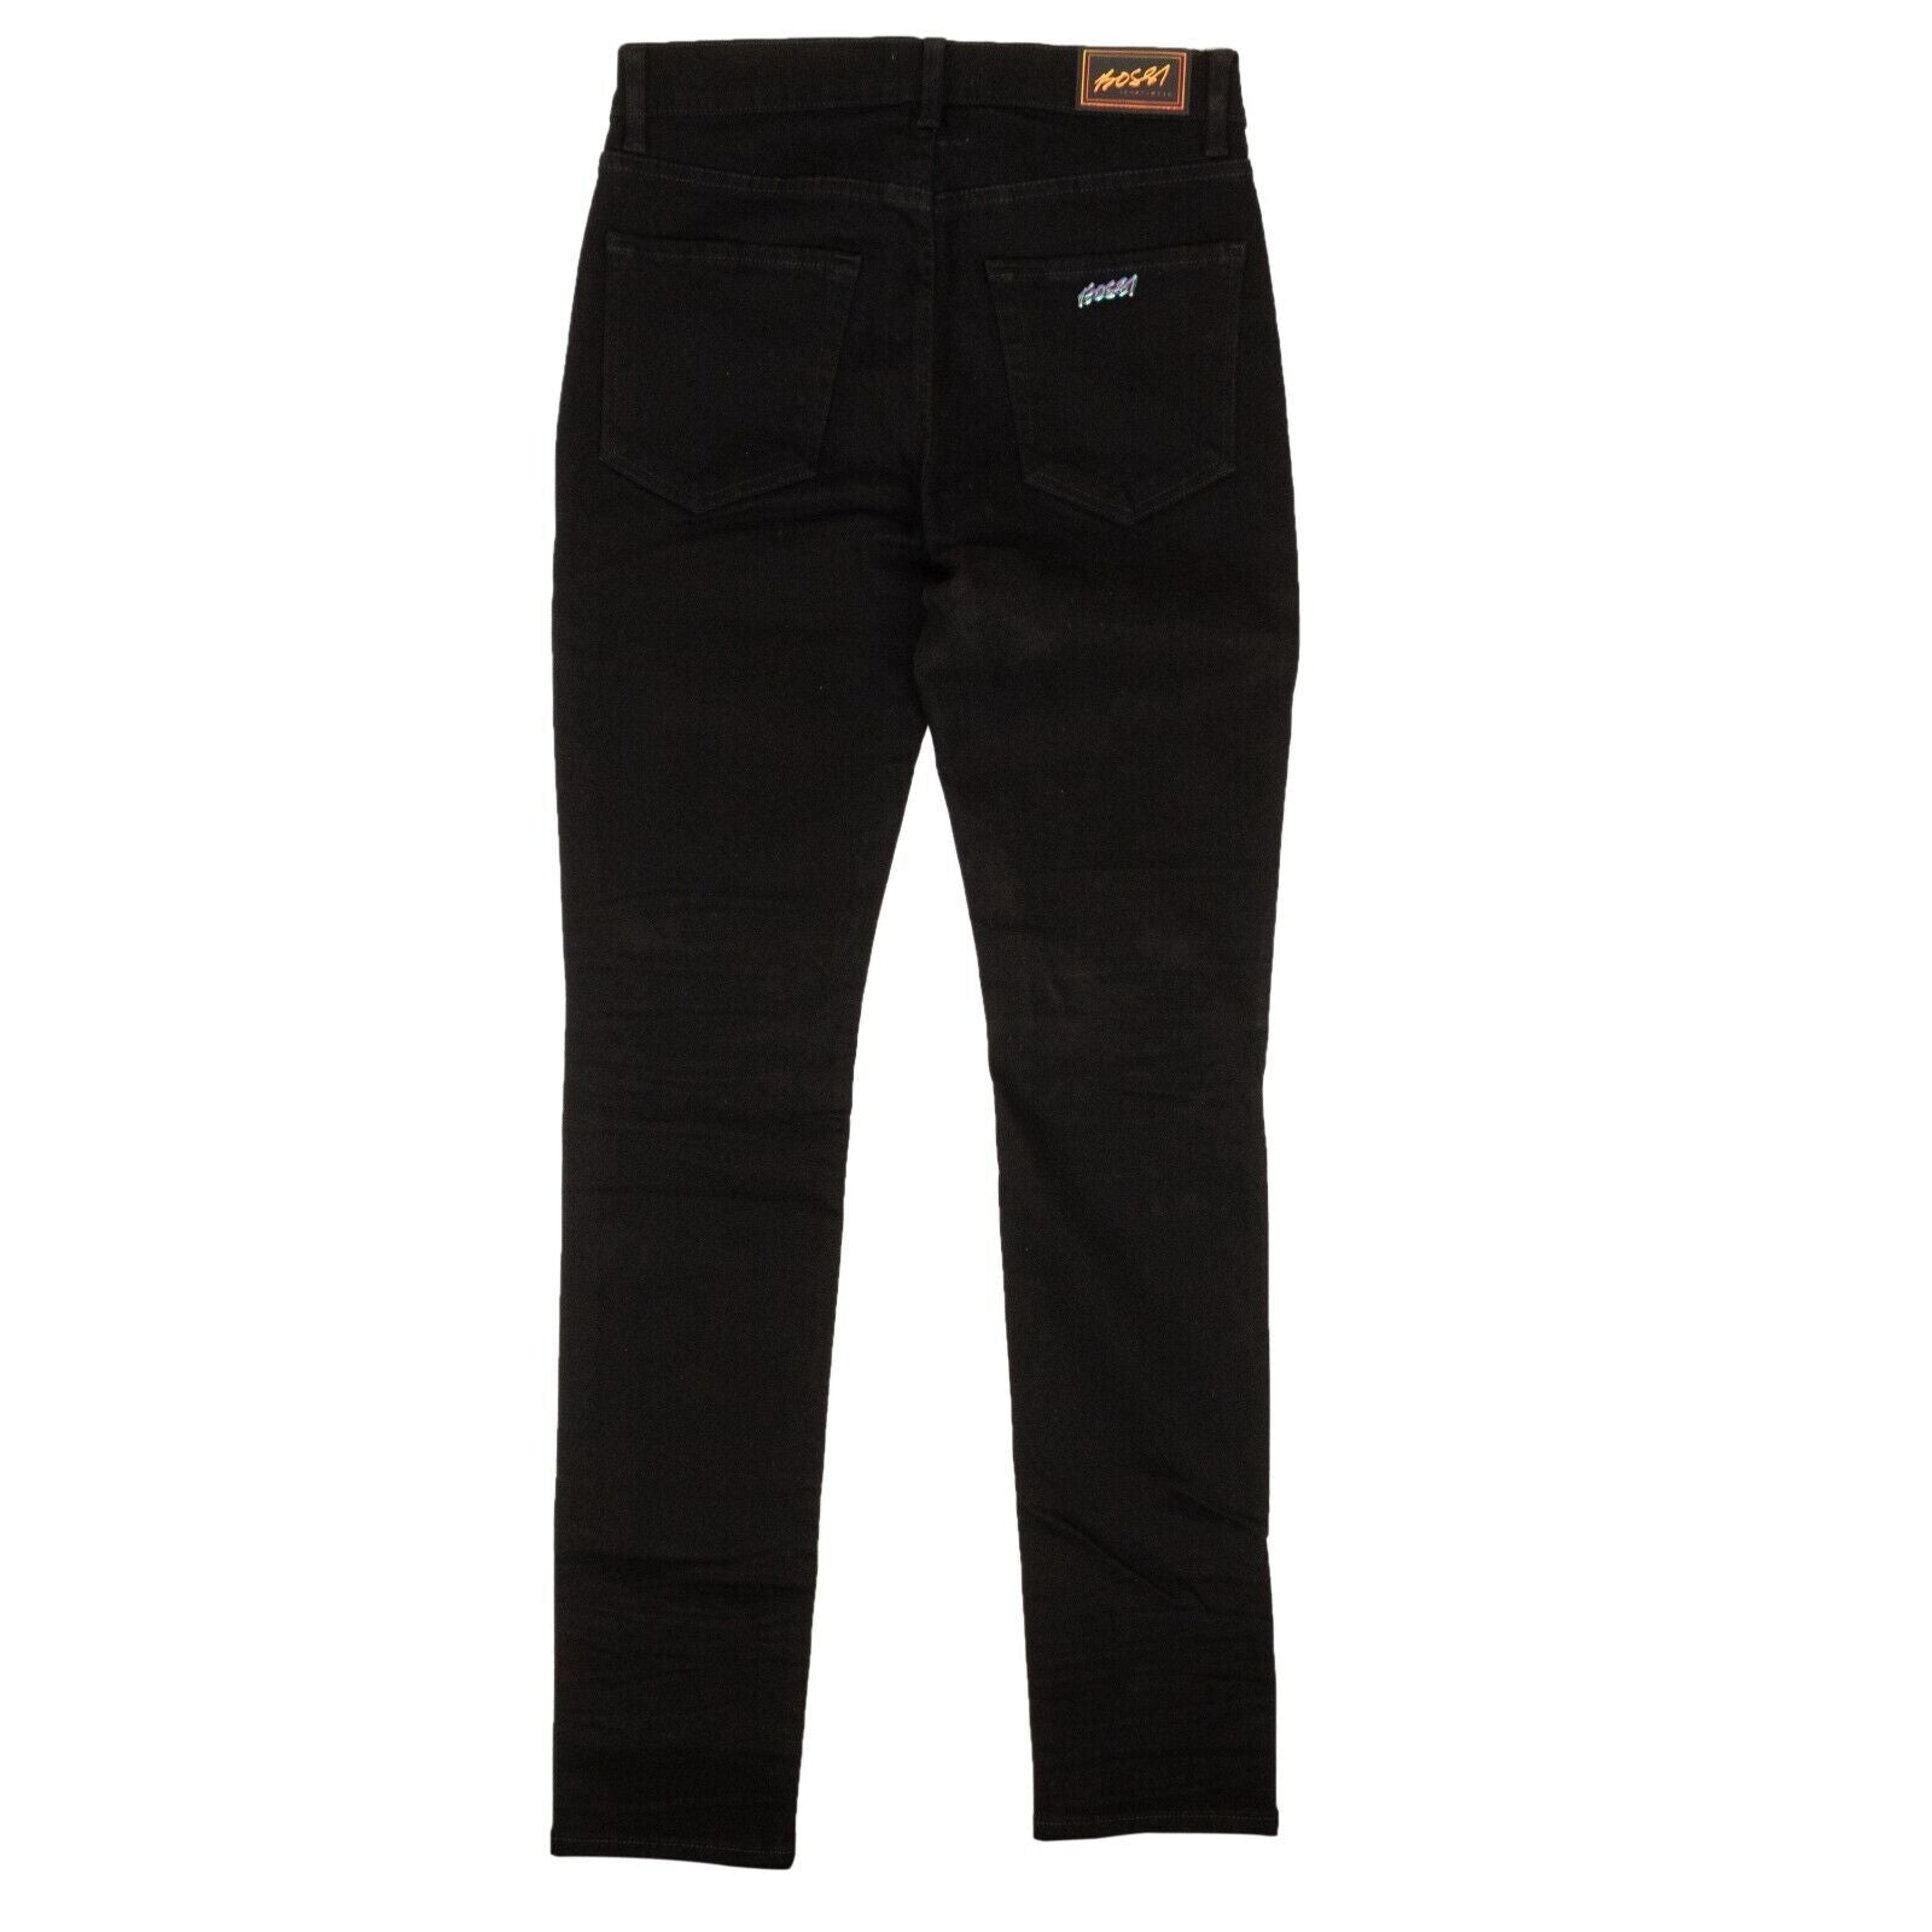 Alternate View 2 of Black Wash Cotton 3D Slim-Fit Jeans